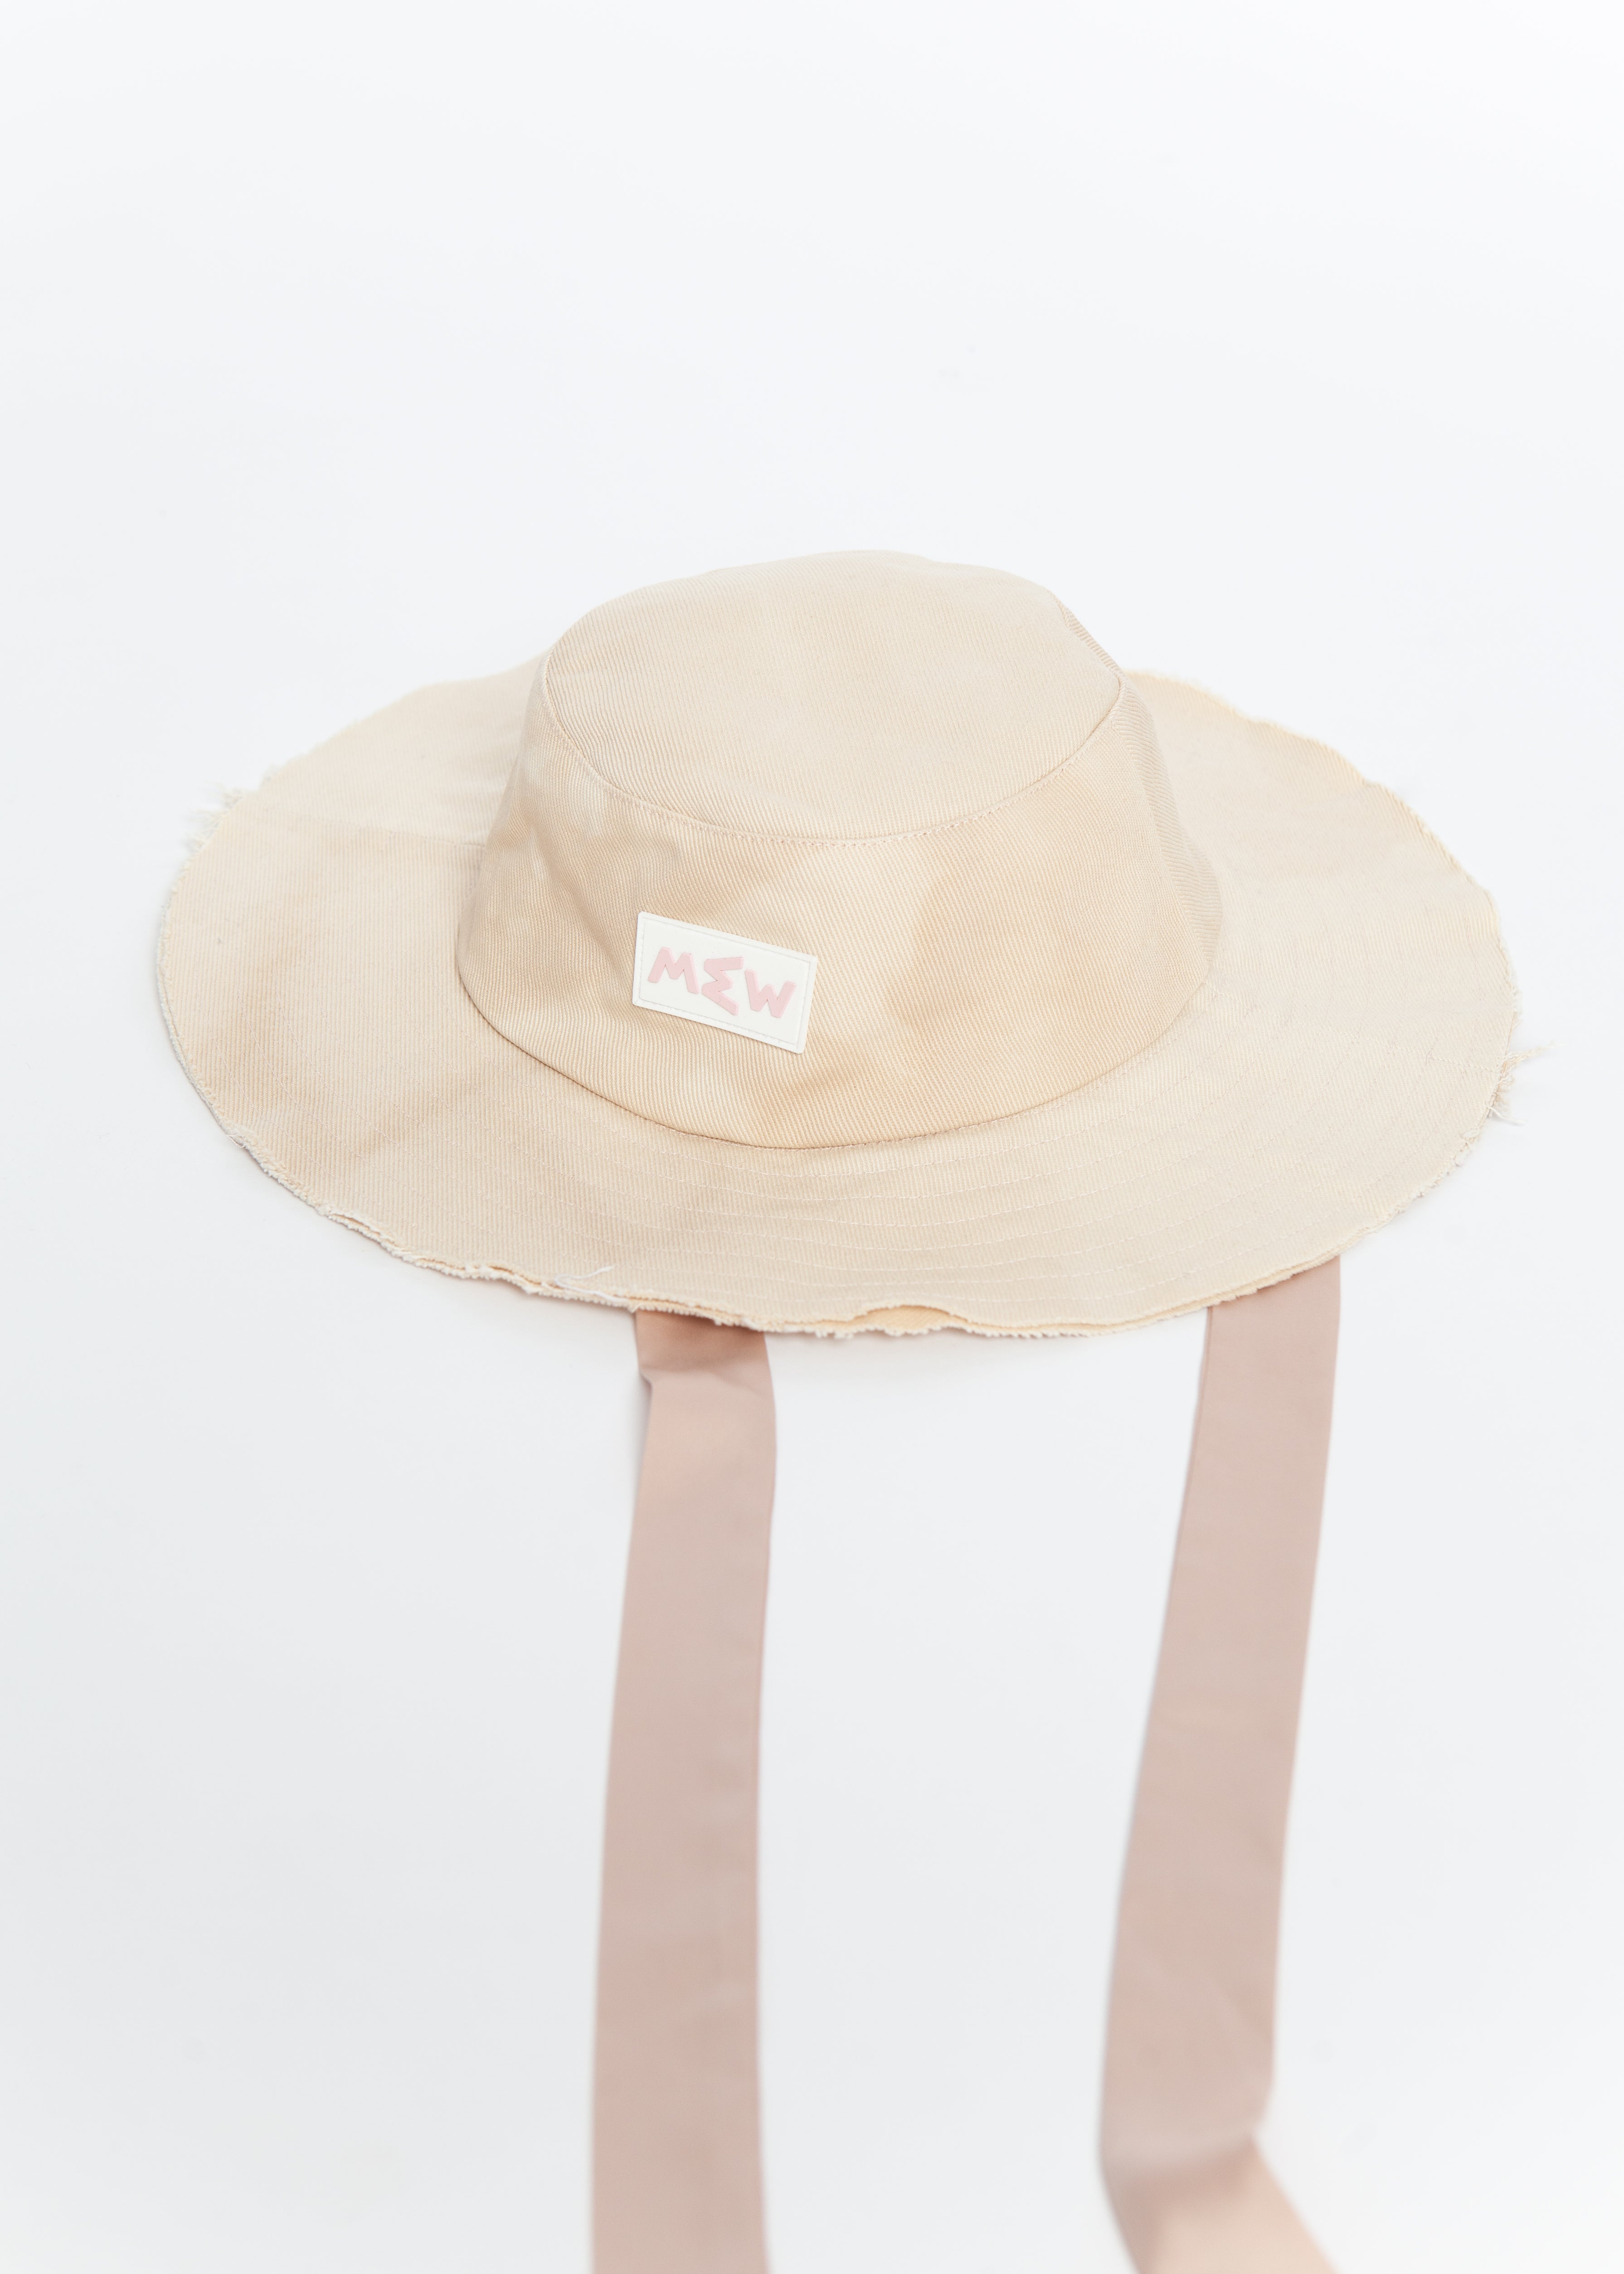 Tea MEW beach bucket hat